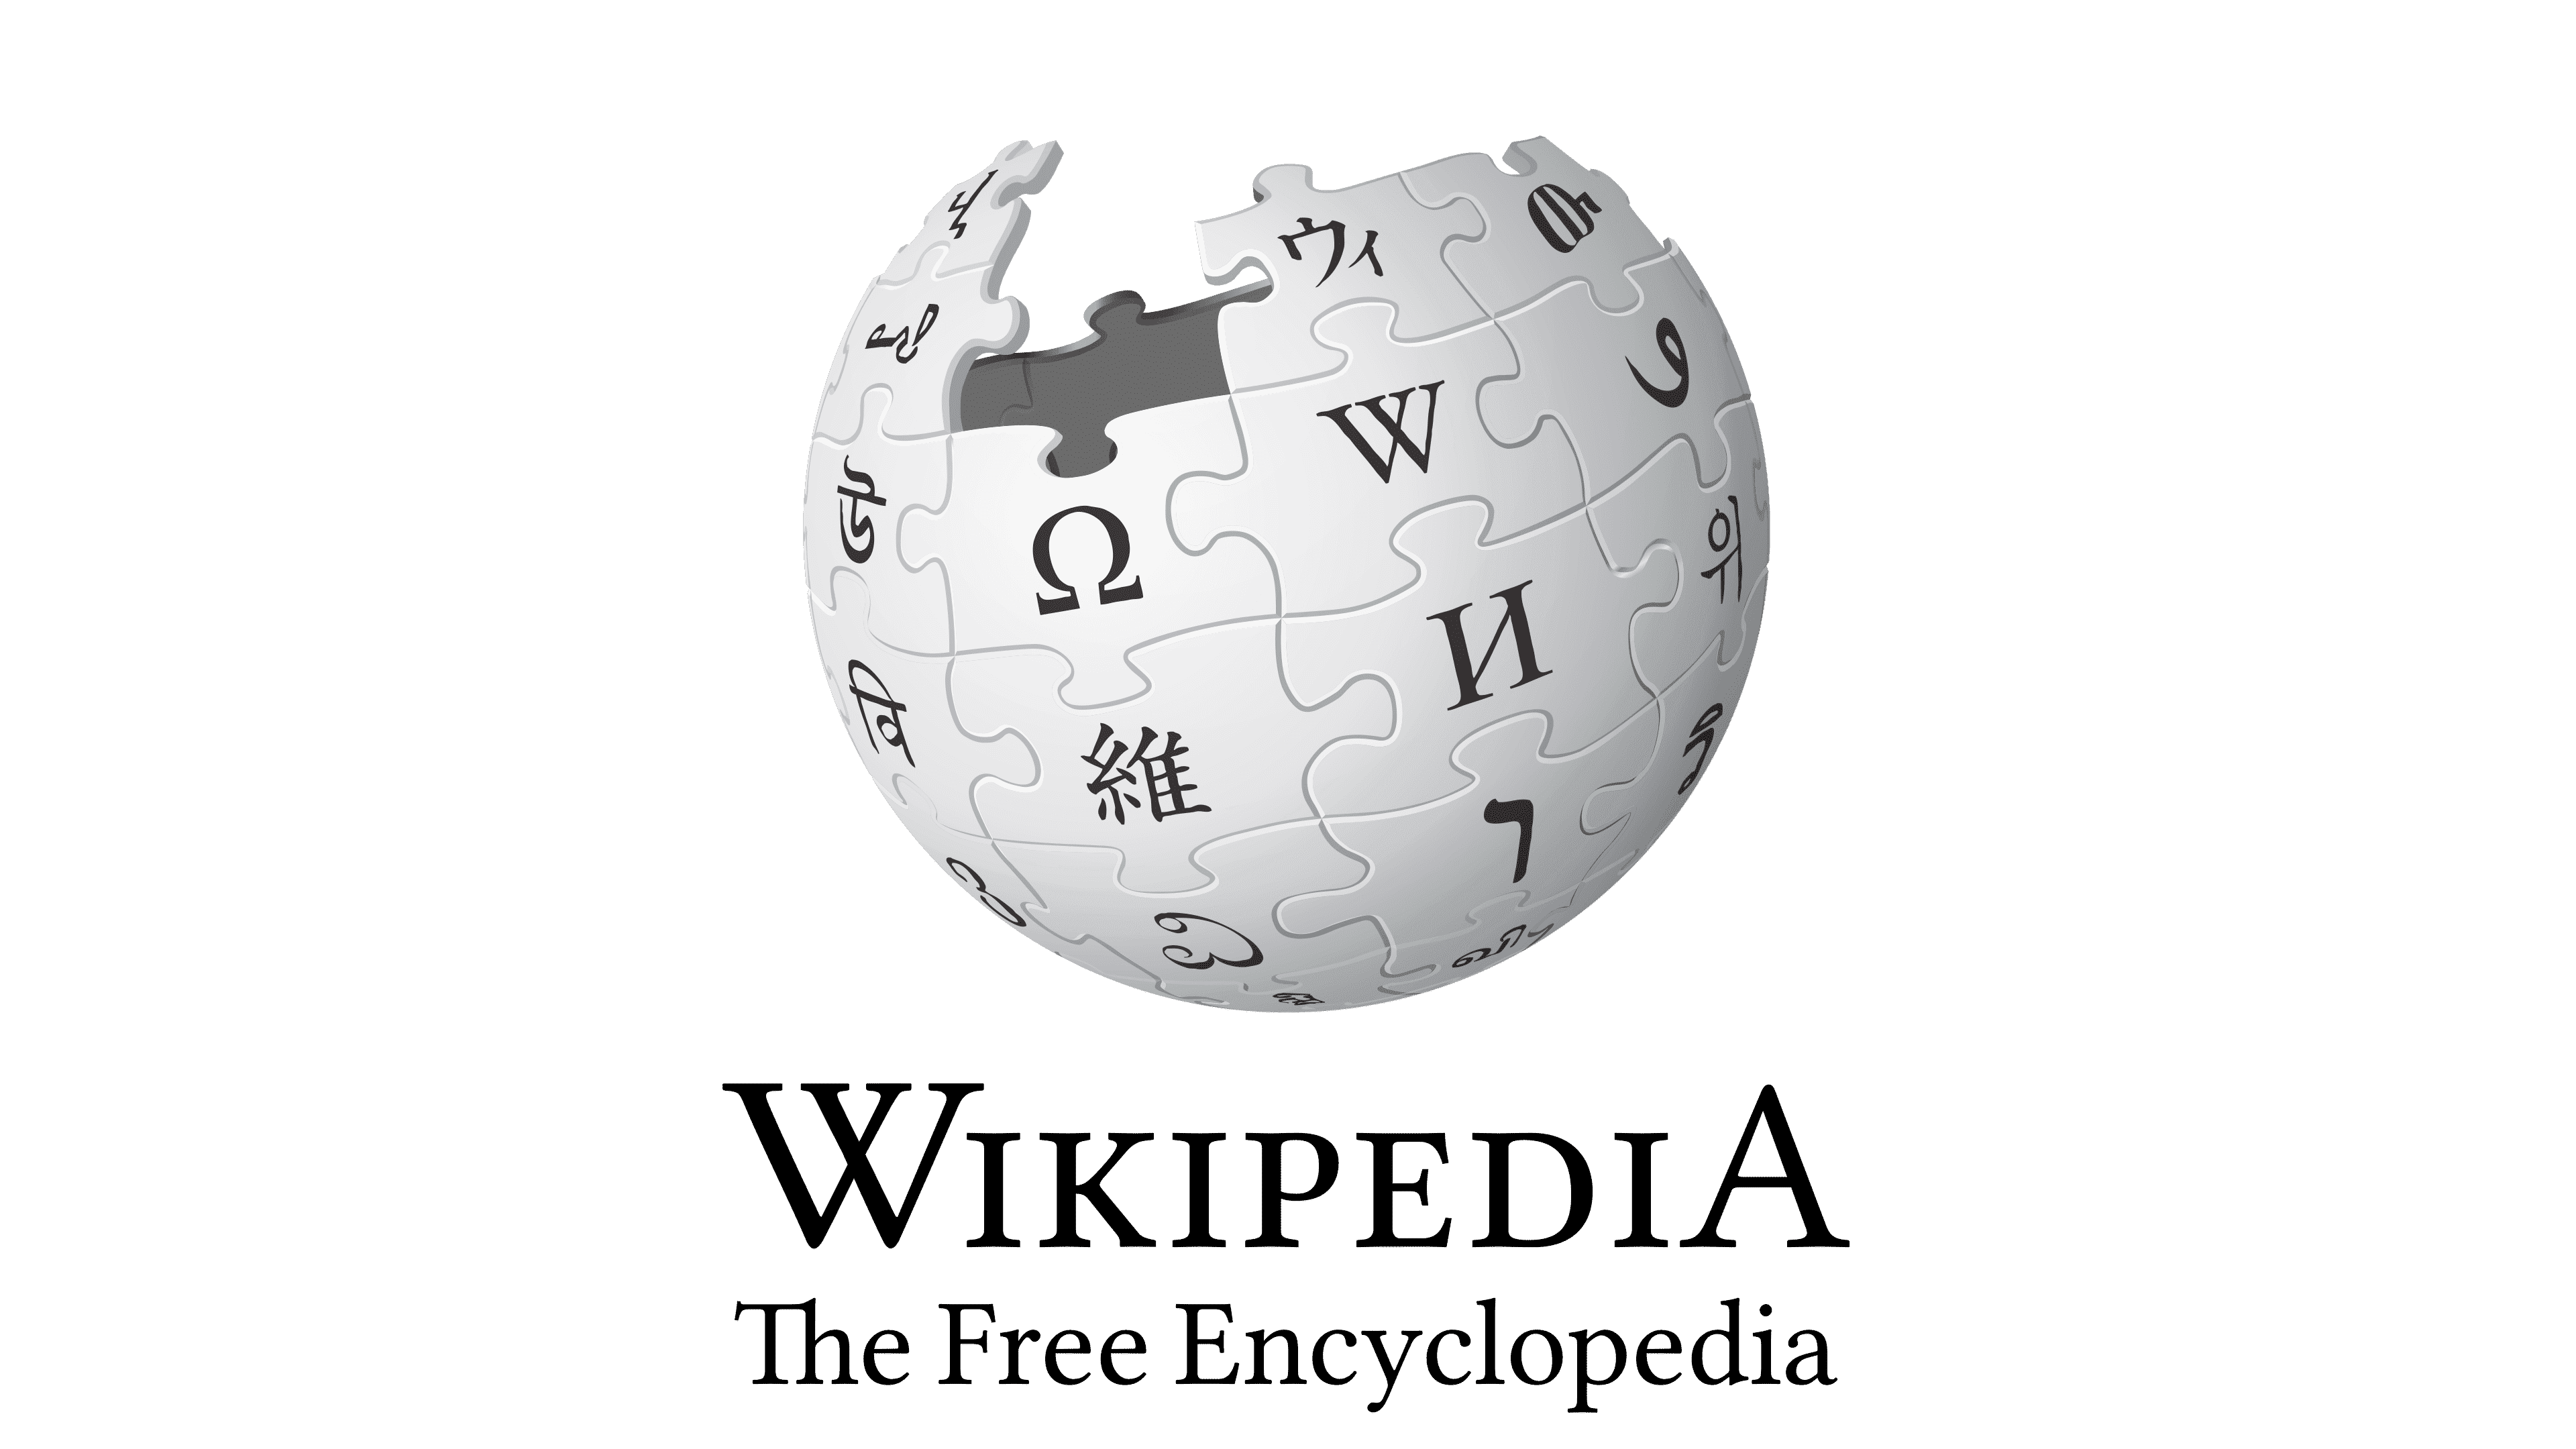 Shades of white - Wikipedia